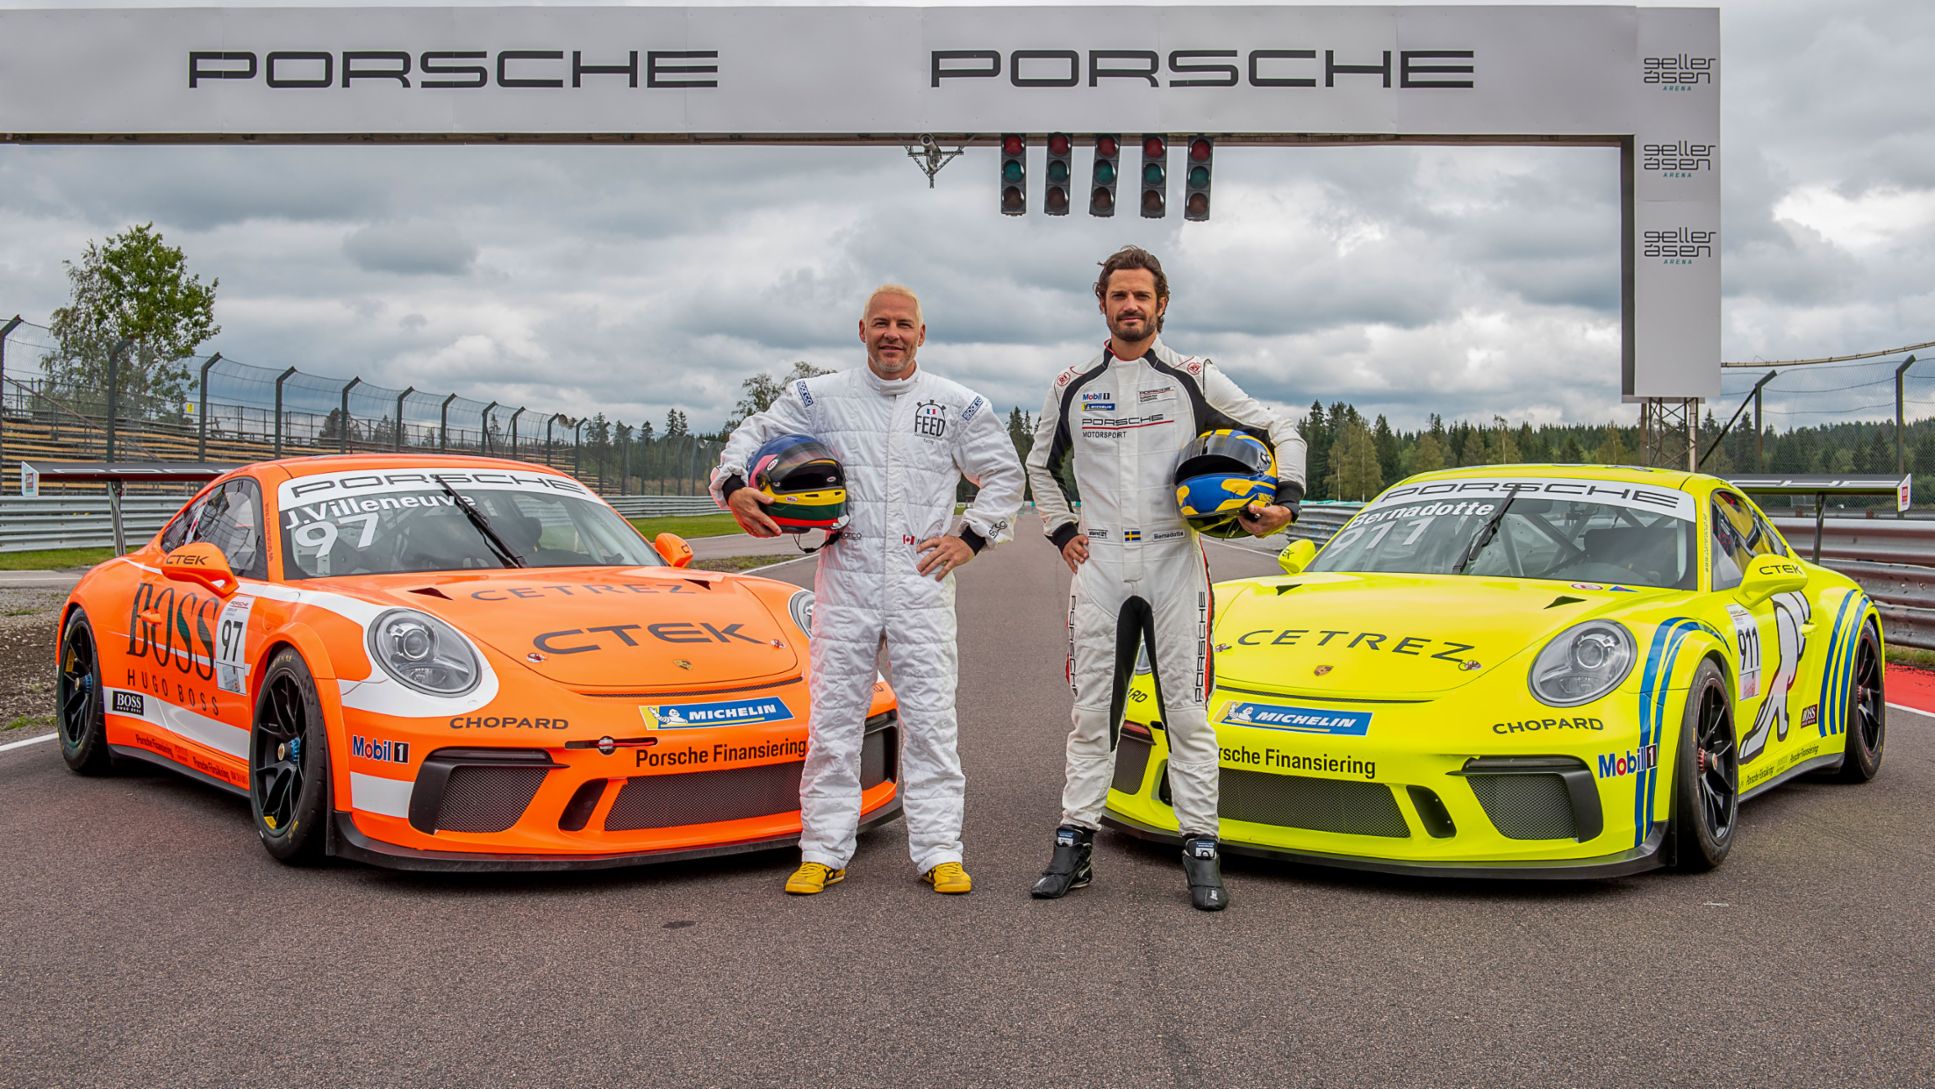 Jacques Villeneuve, Prince Carl Philip of Sweden, 911 GT3 Cup, Porsche Carrera Cup Scandinavia, Kanonloppet, 2019, Porsche AG